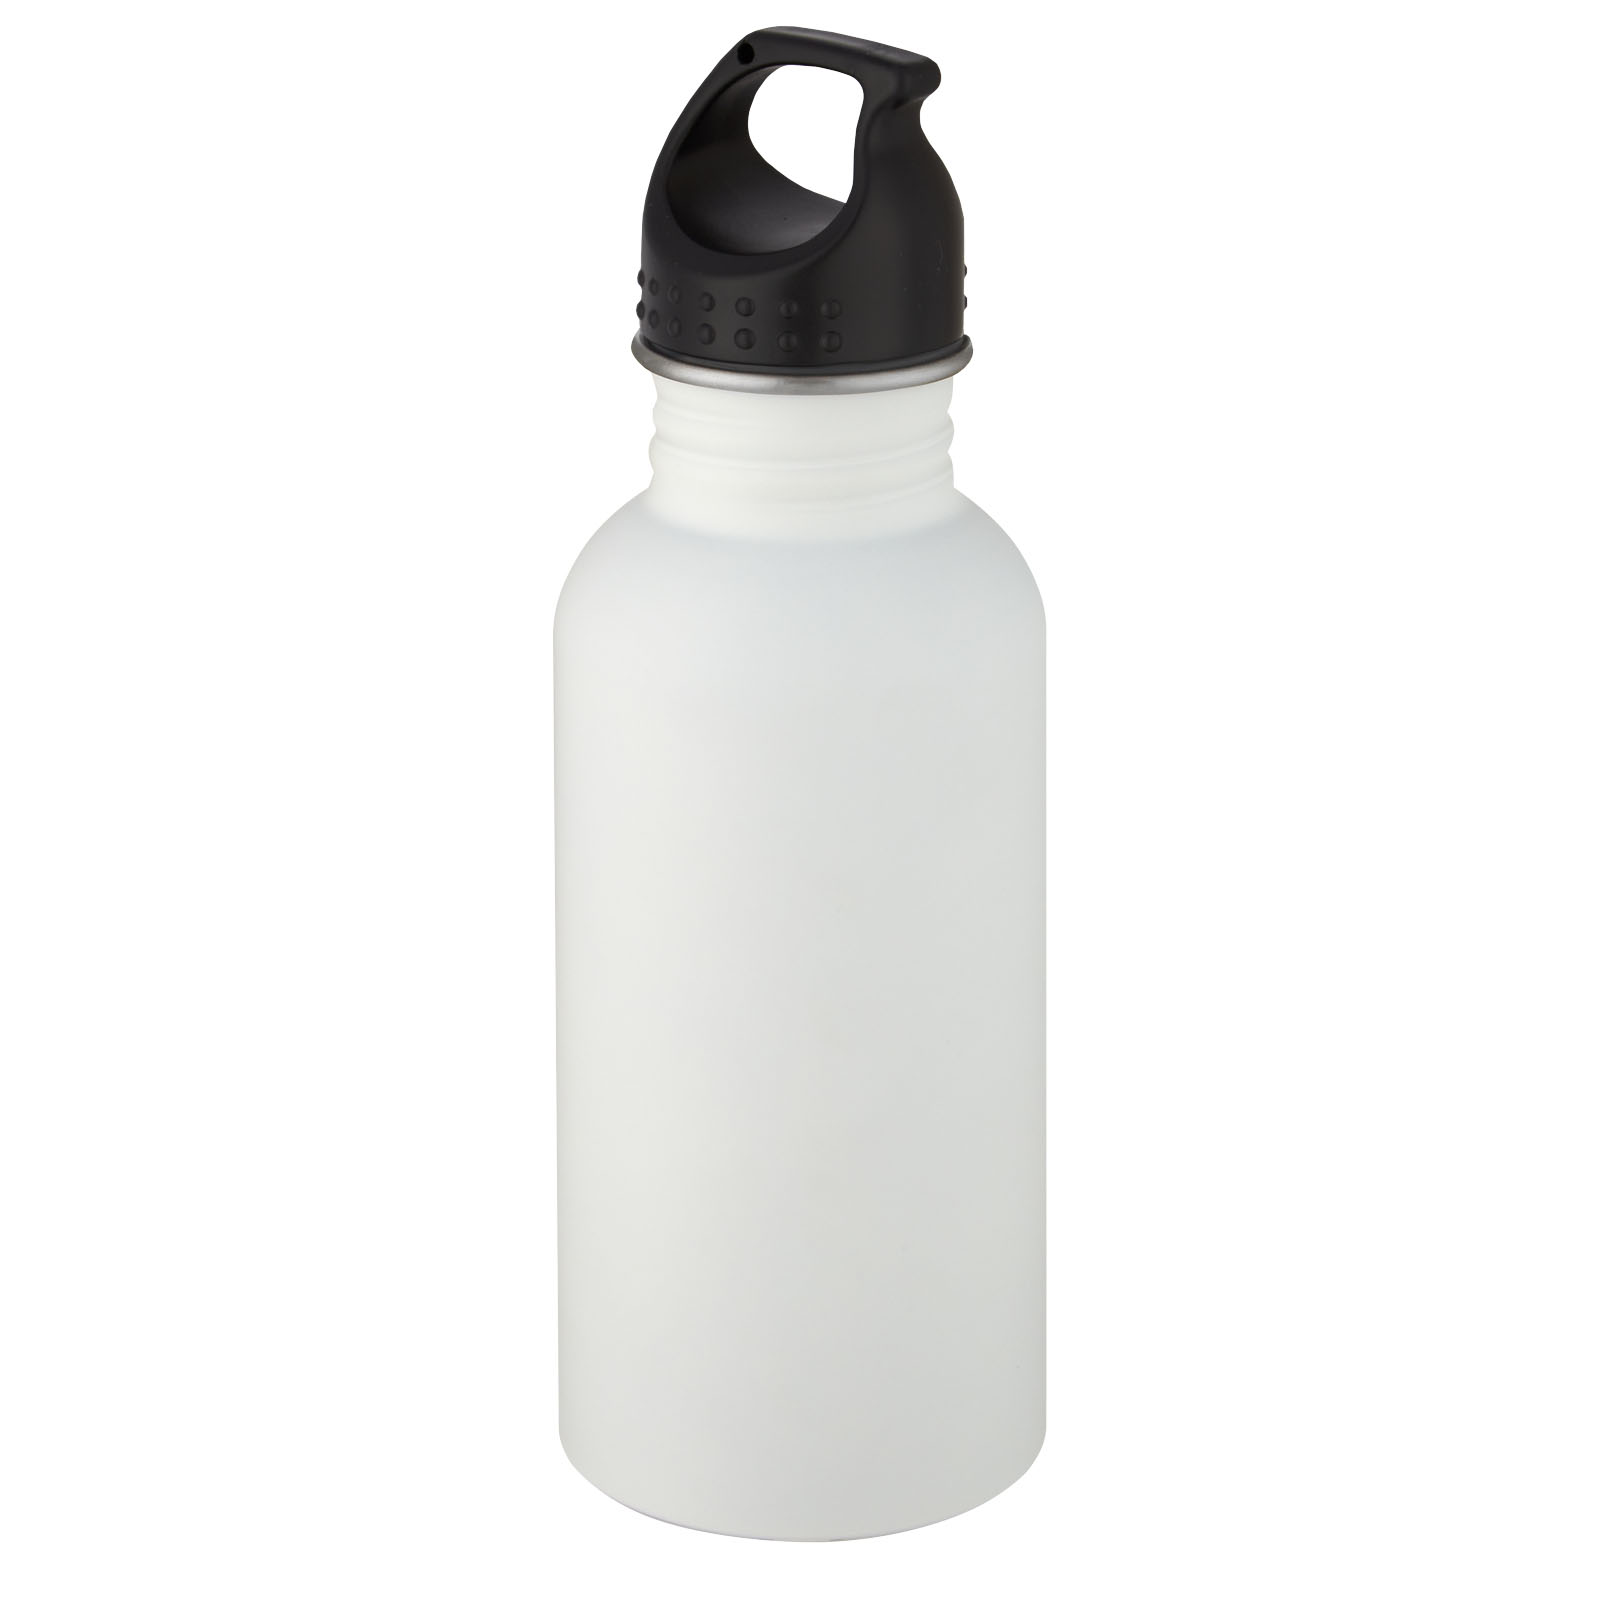 Advertising Water bottles - Luca 500 ml stainless steel water bottle - 0